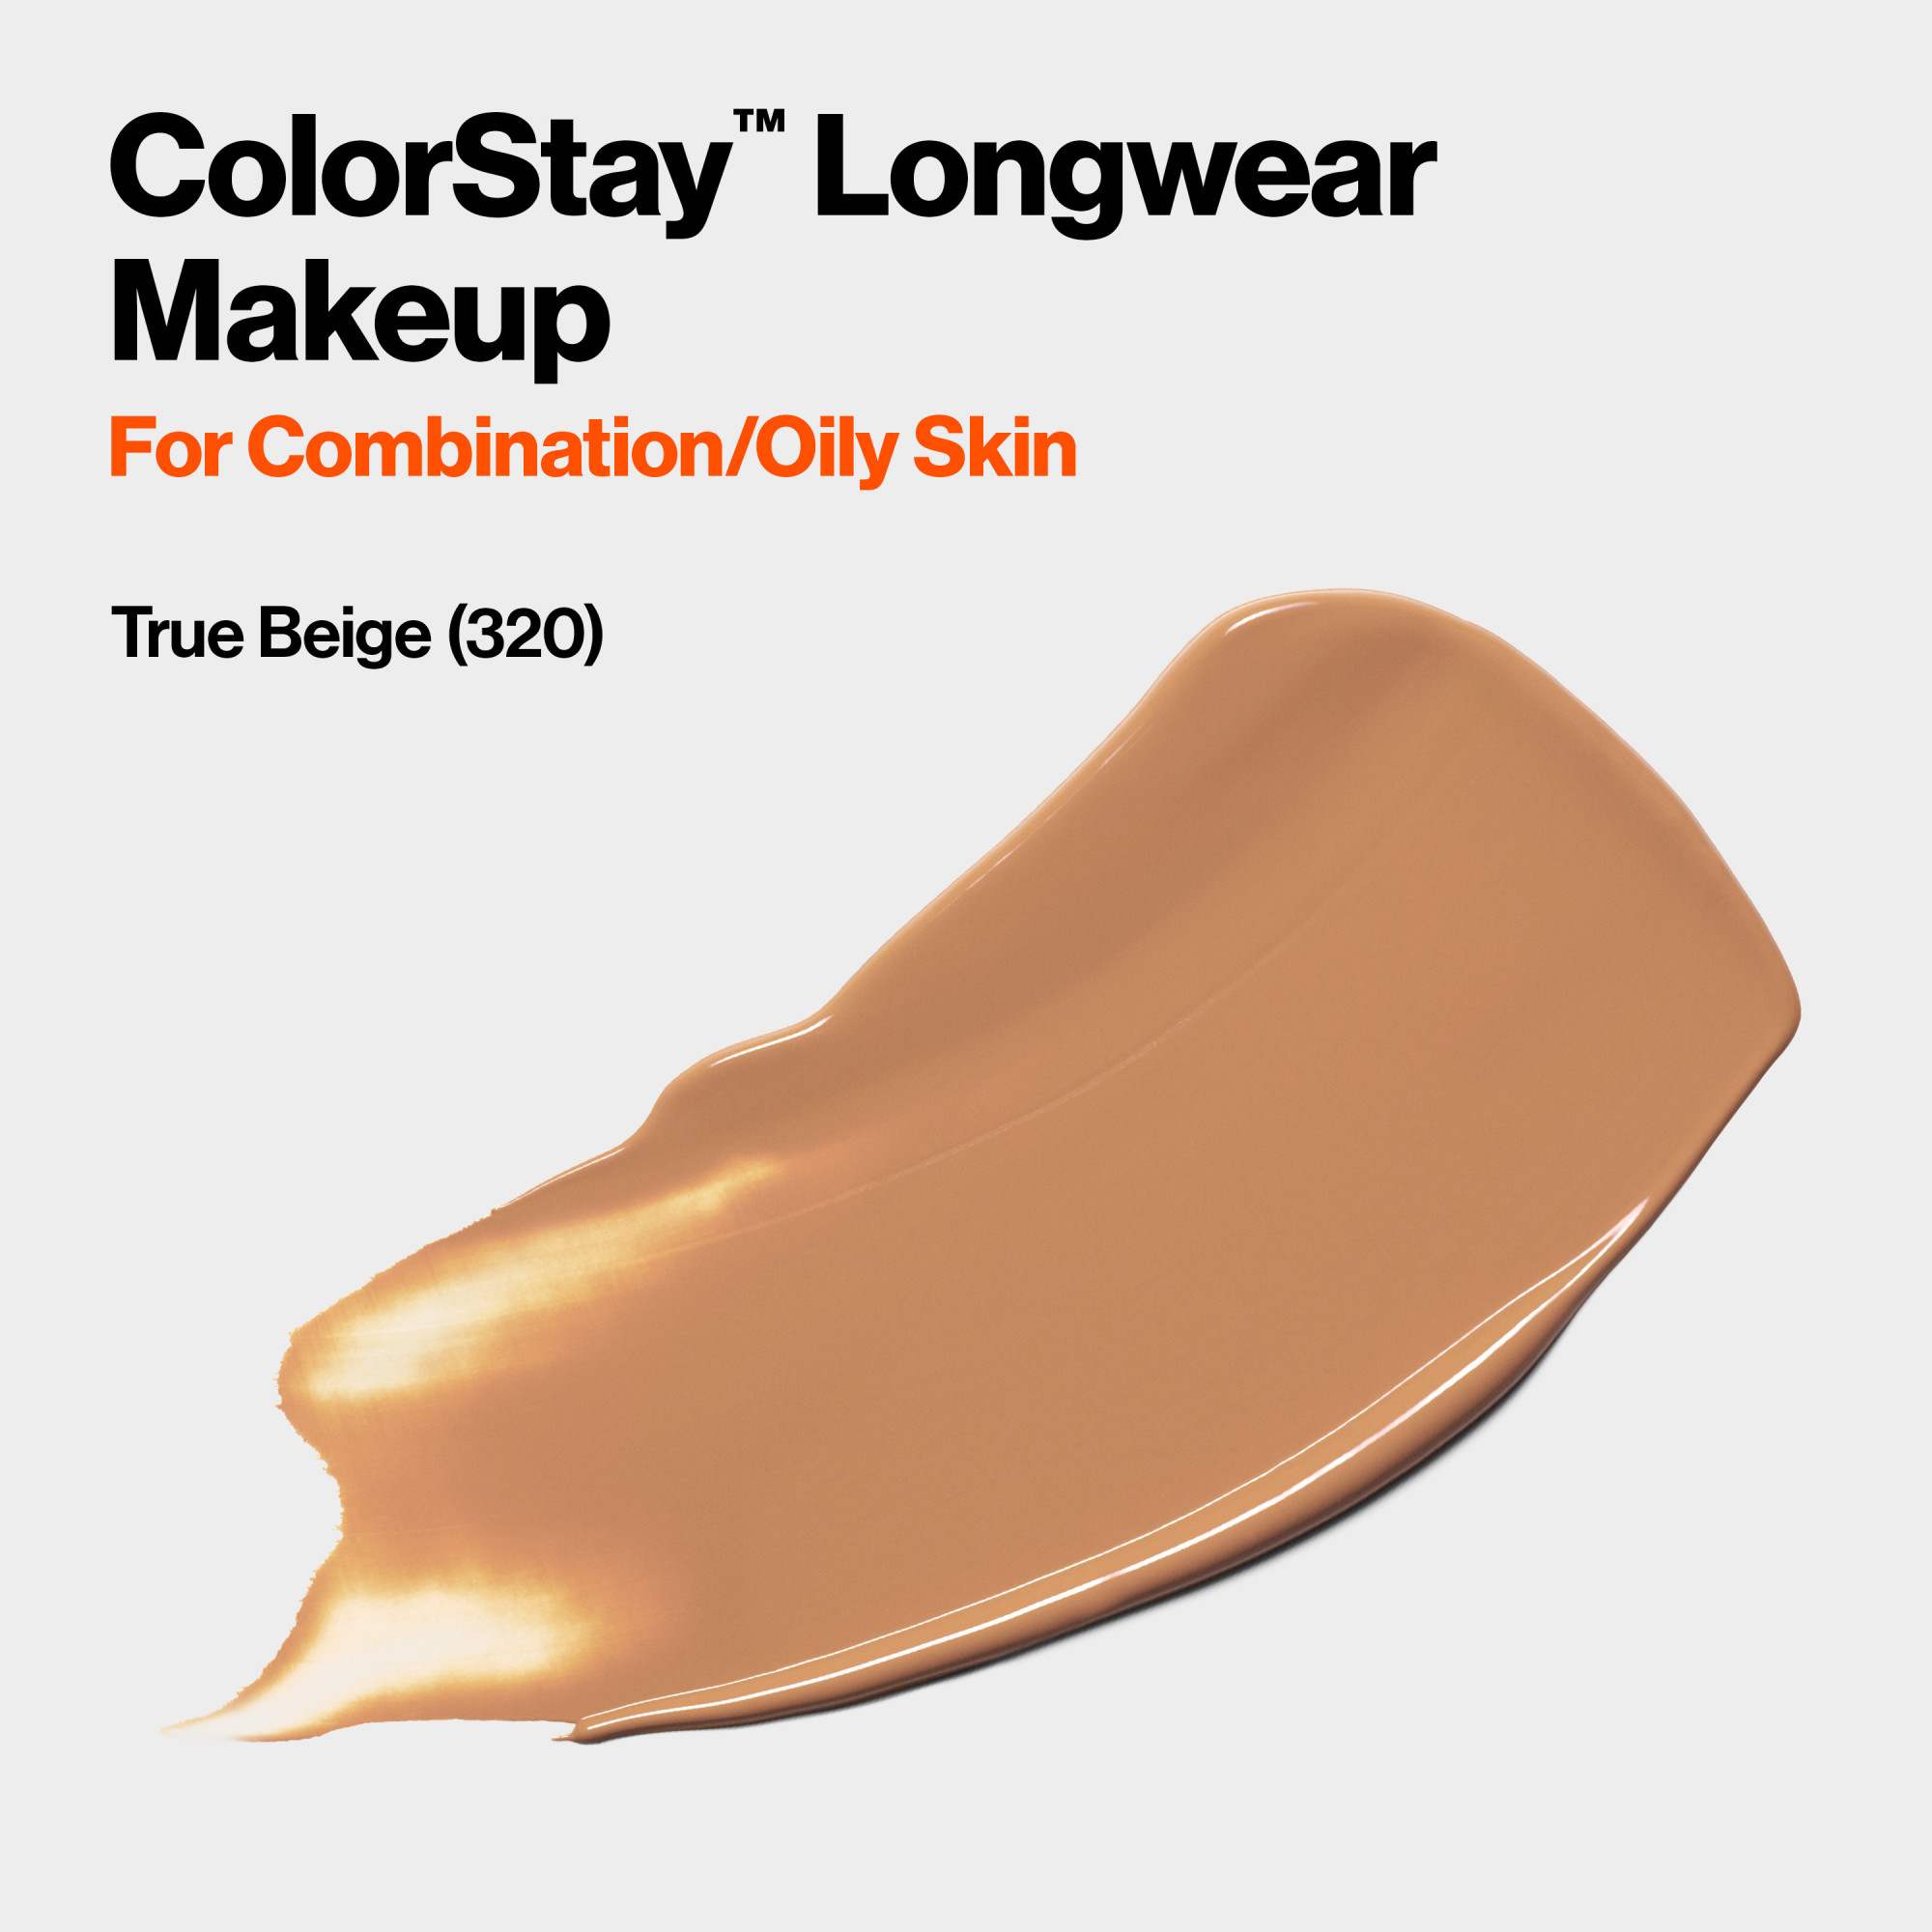 Revlon ColorStay Liquid Foundation Makeup, Matte Finish, Combination/Oily Skin, SPF 15, 320 True Beige, 1 fl oz. - image 3 of 11